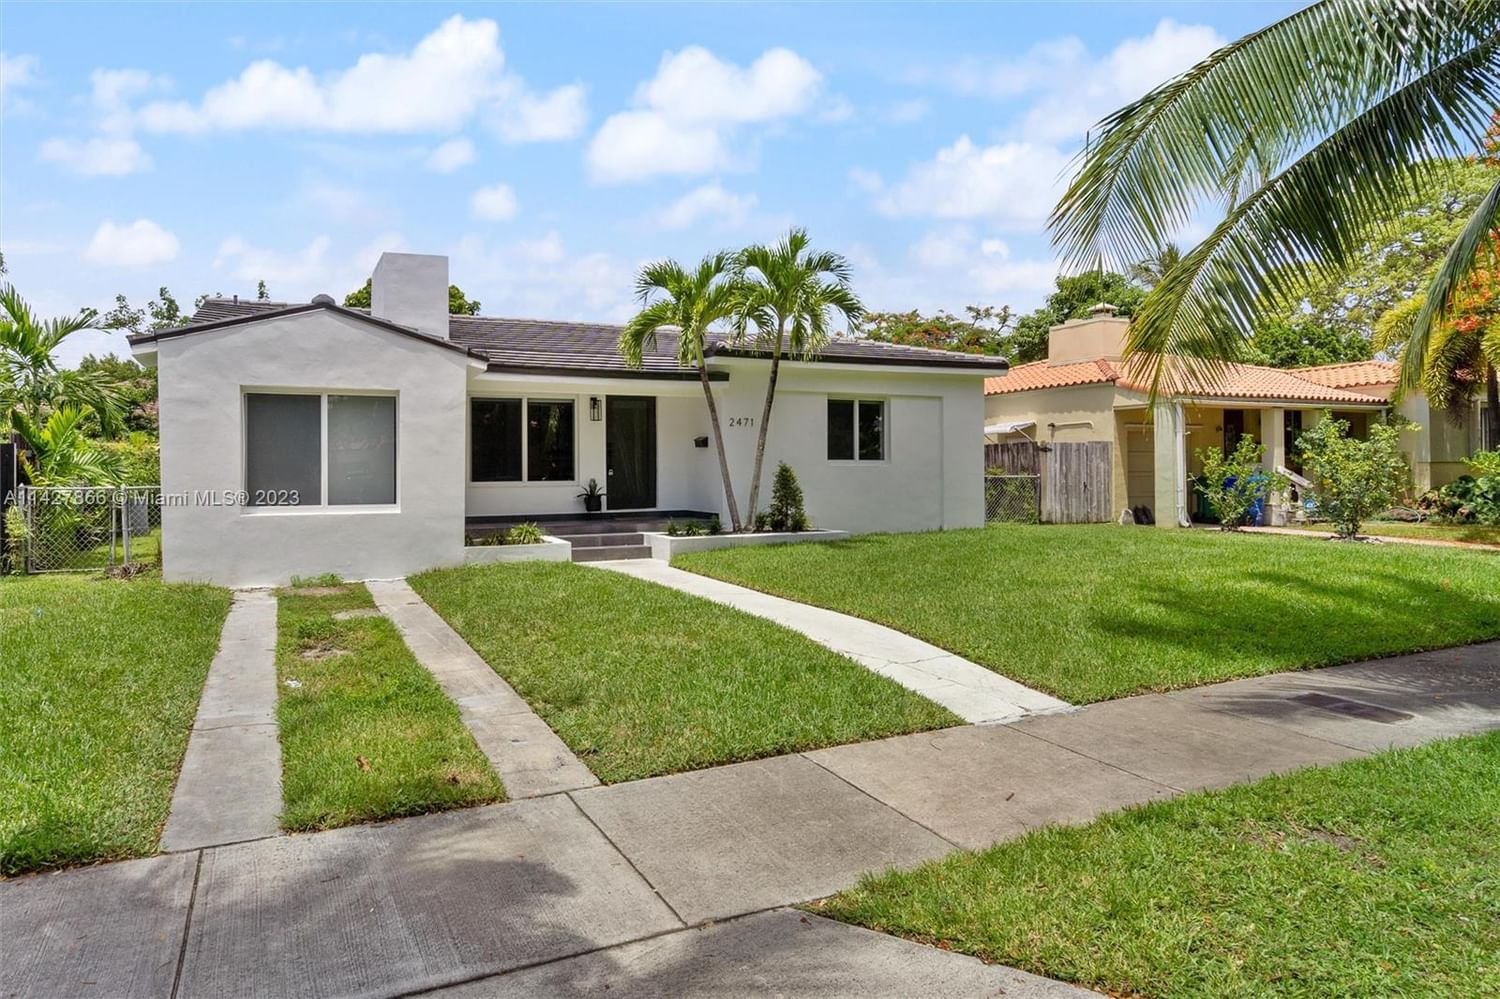 Real estate property located at 2471 19th Ter, Miami-Dade County, Miami, FL